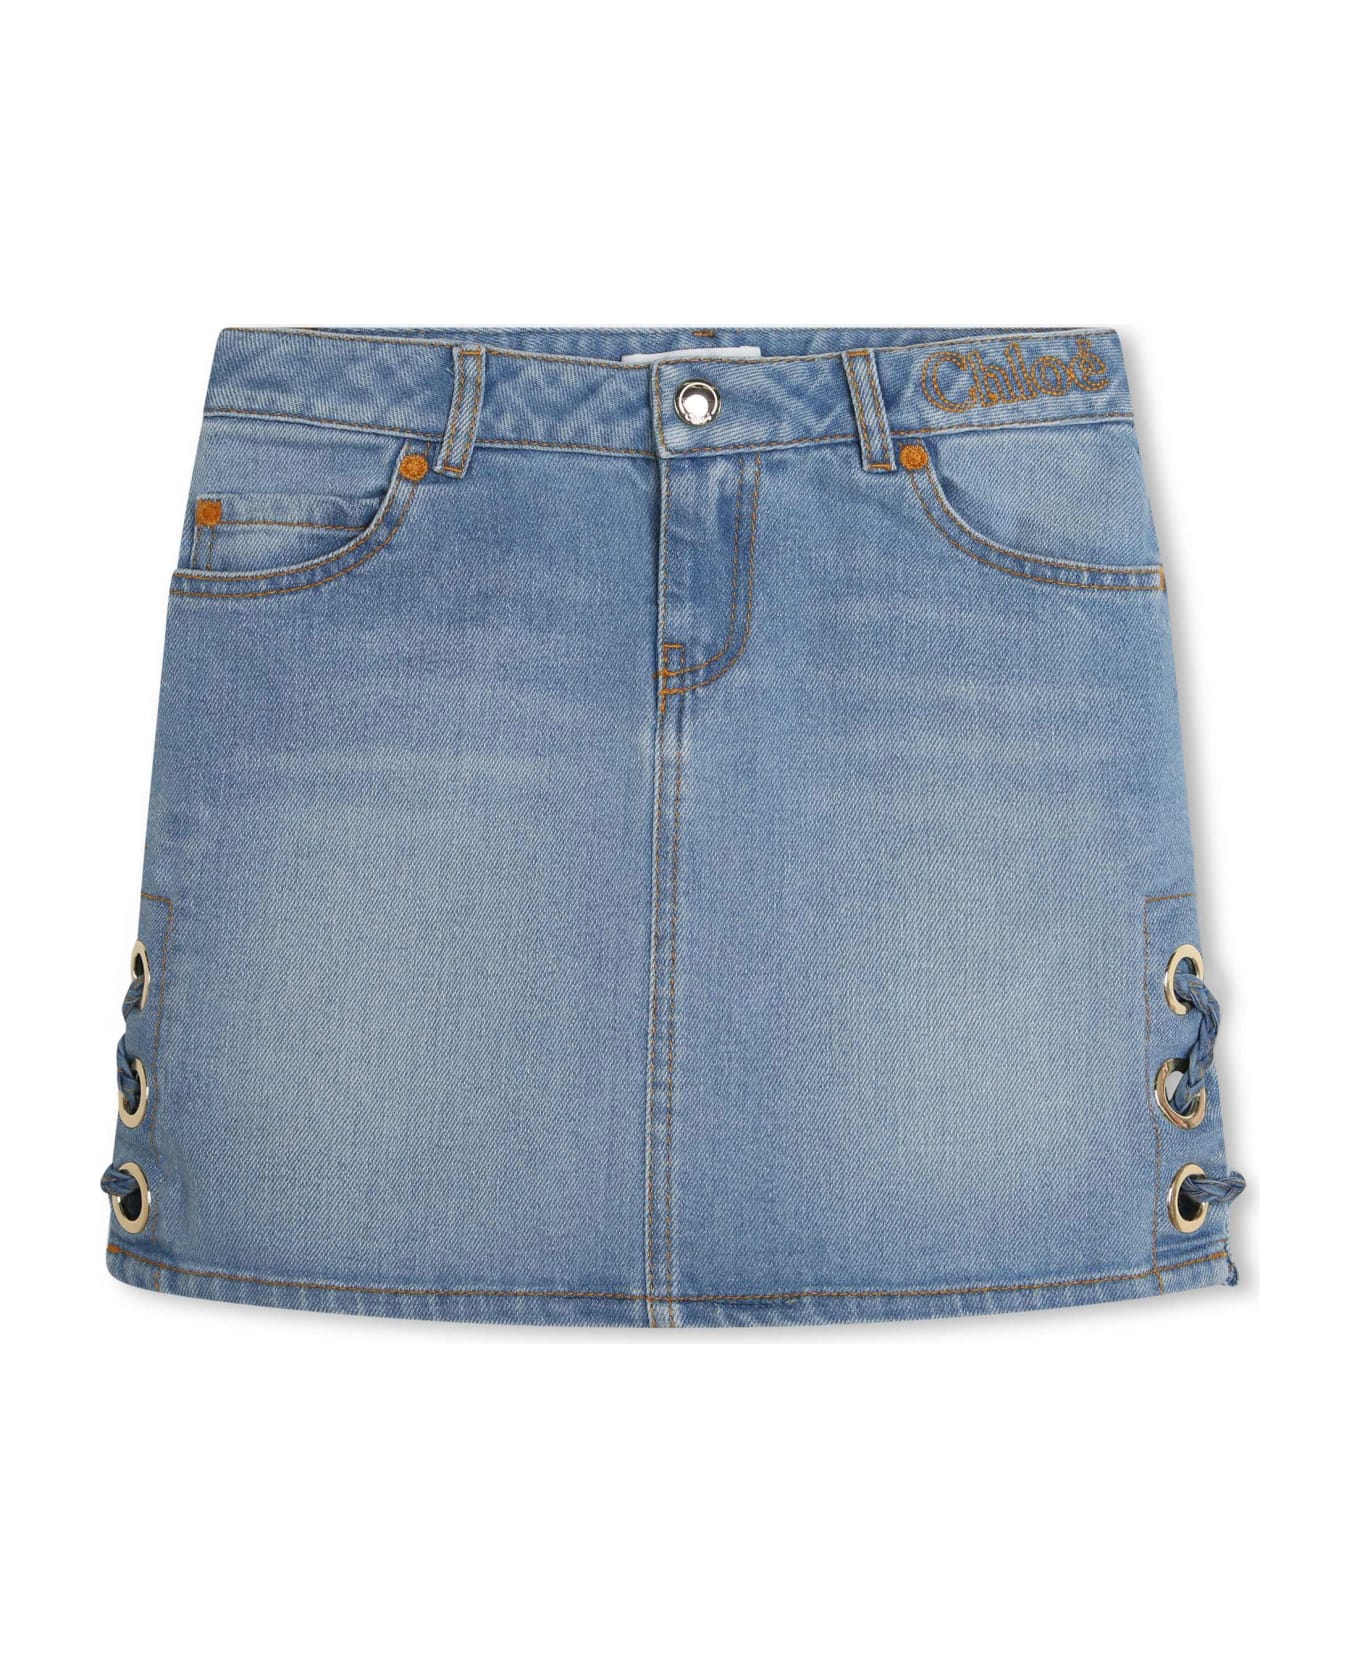 Chloé Denim Skirt With Embroidery - Blue